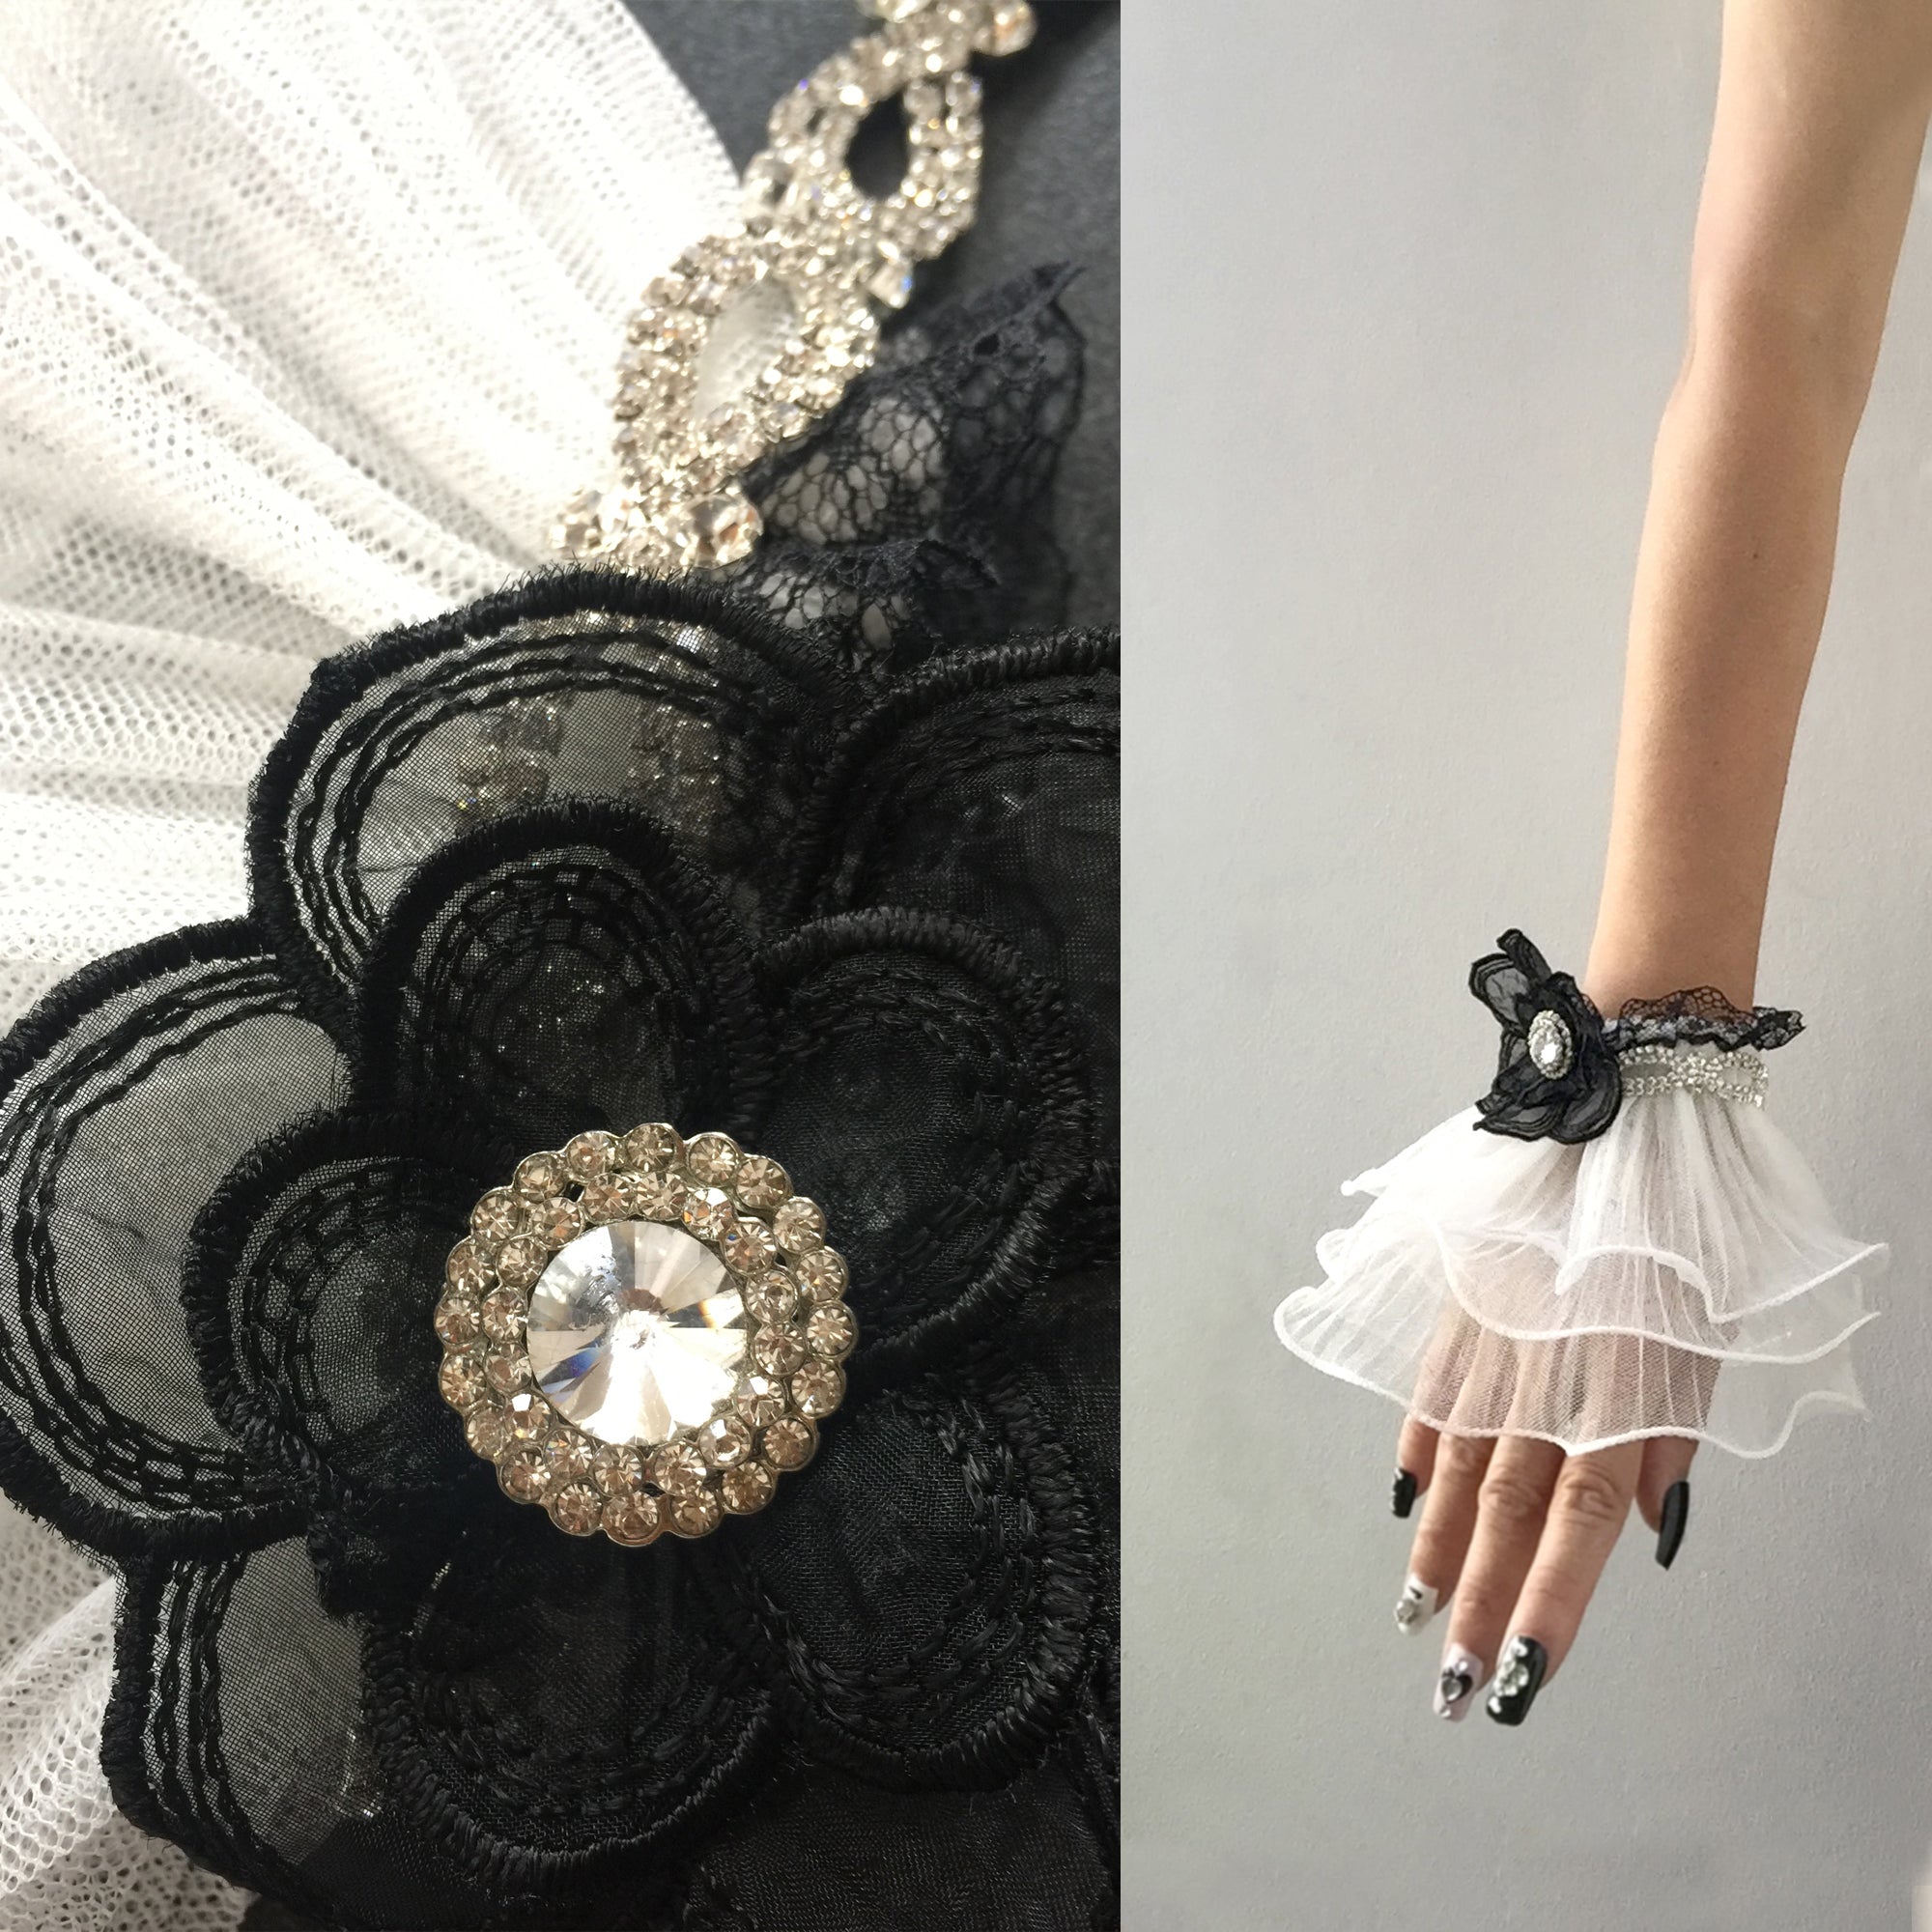 Lace Gloves Black & White, Lace Cuffs White, Lace Cuffs Bracelet, Dress Gloves, Bridal Gloves